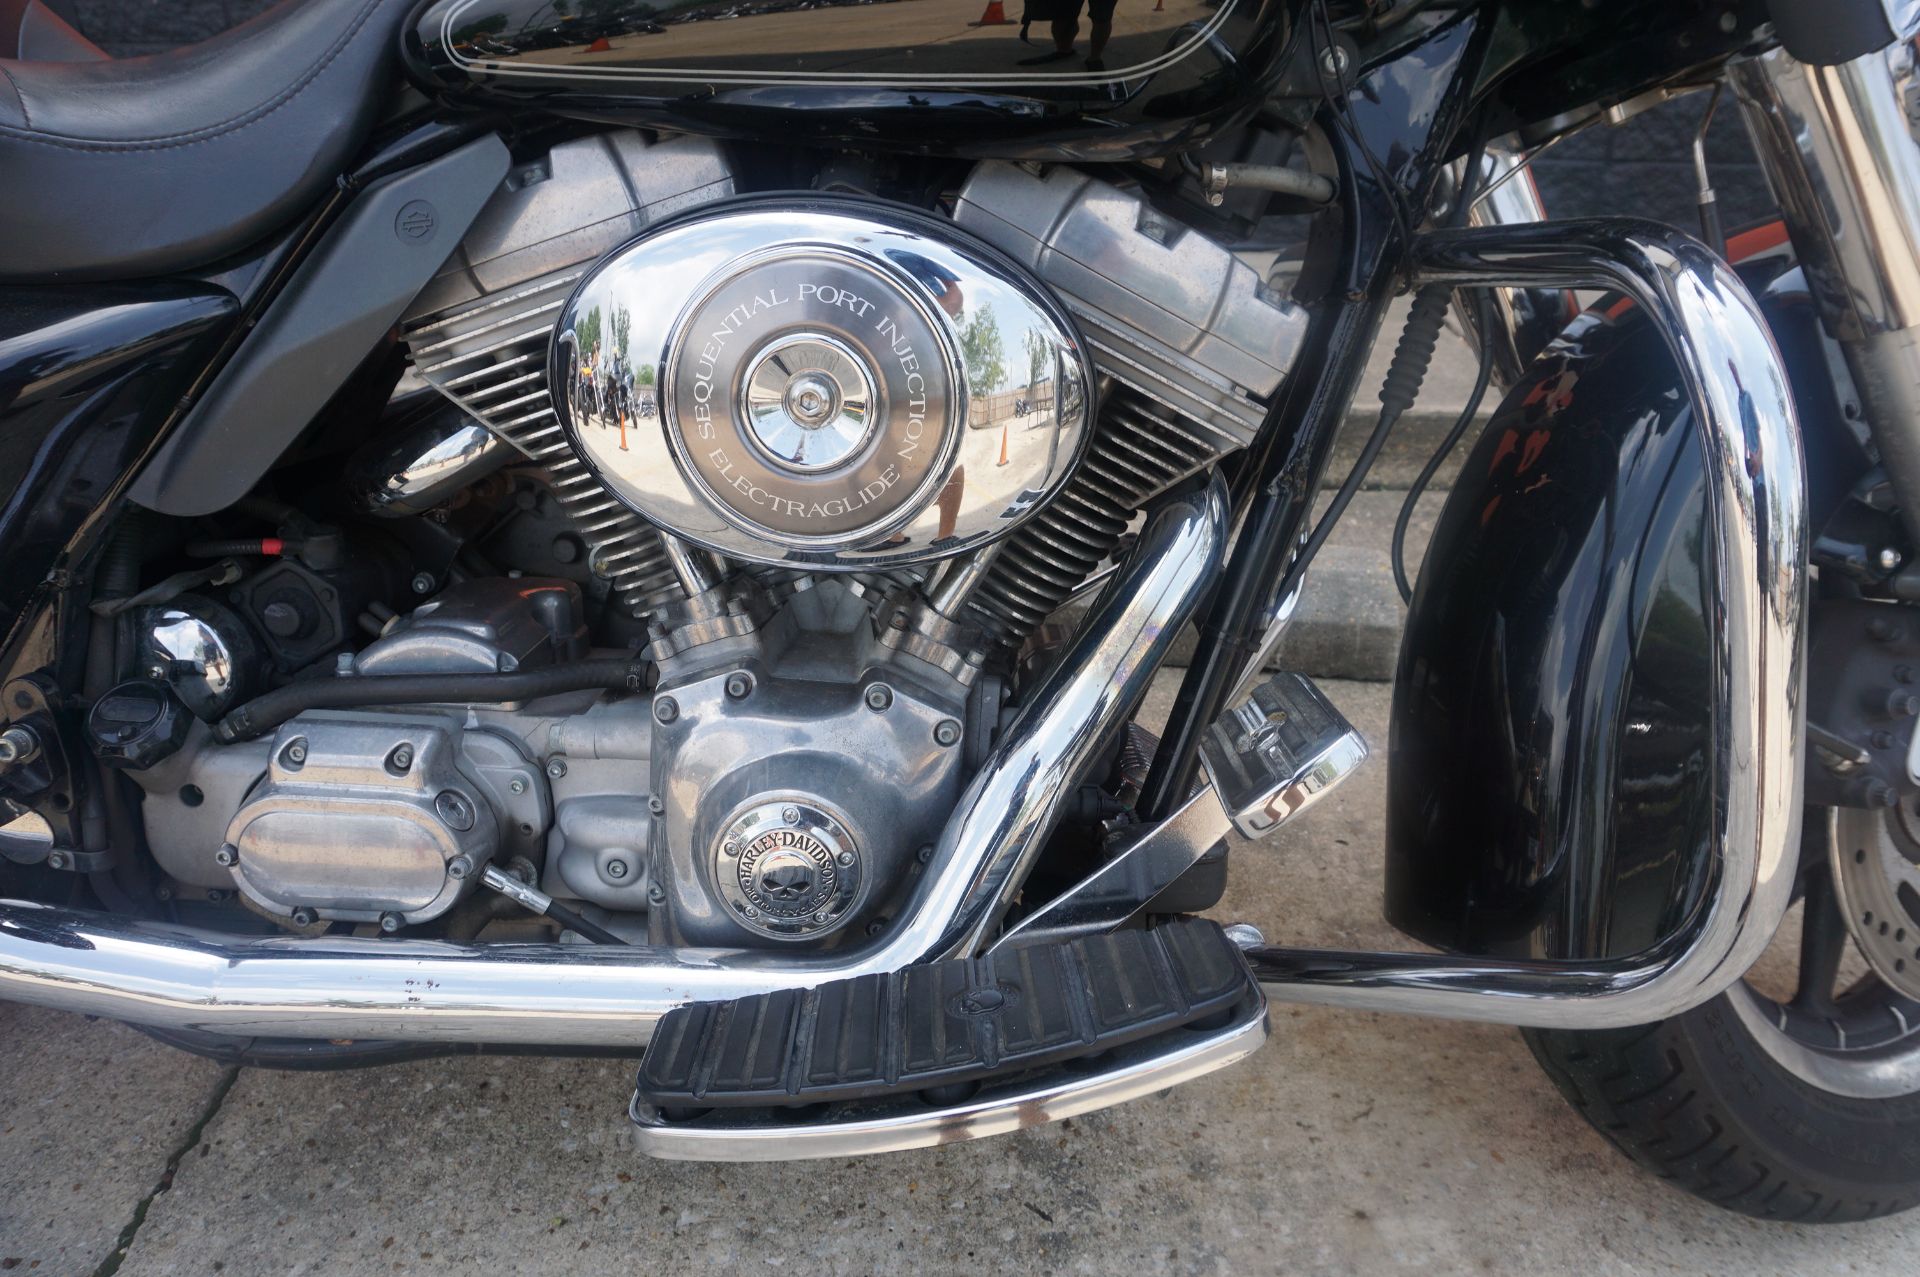 2006 Harley-Davidson Electra Glide® Classic in Metairie, Louisiana - Photo 4